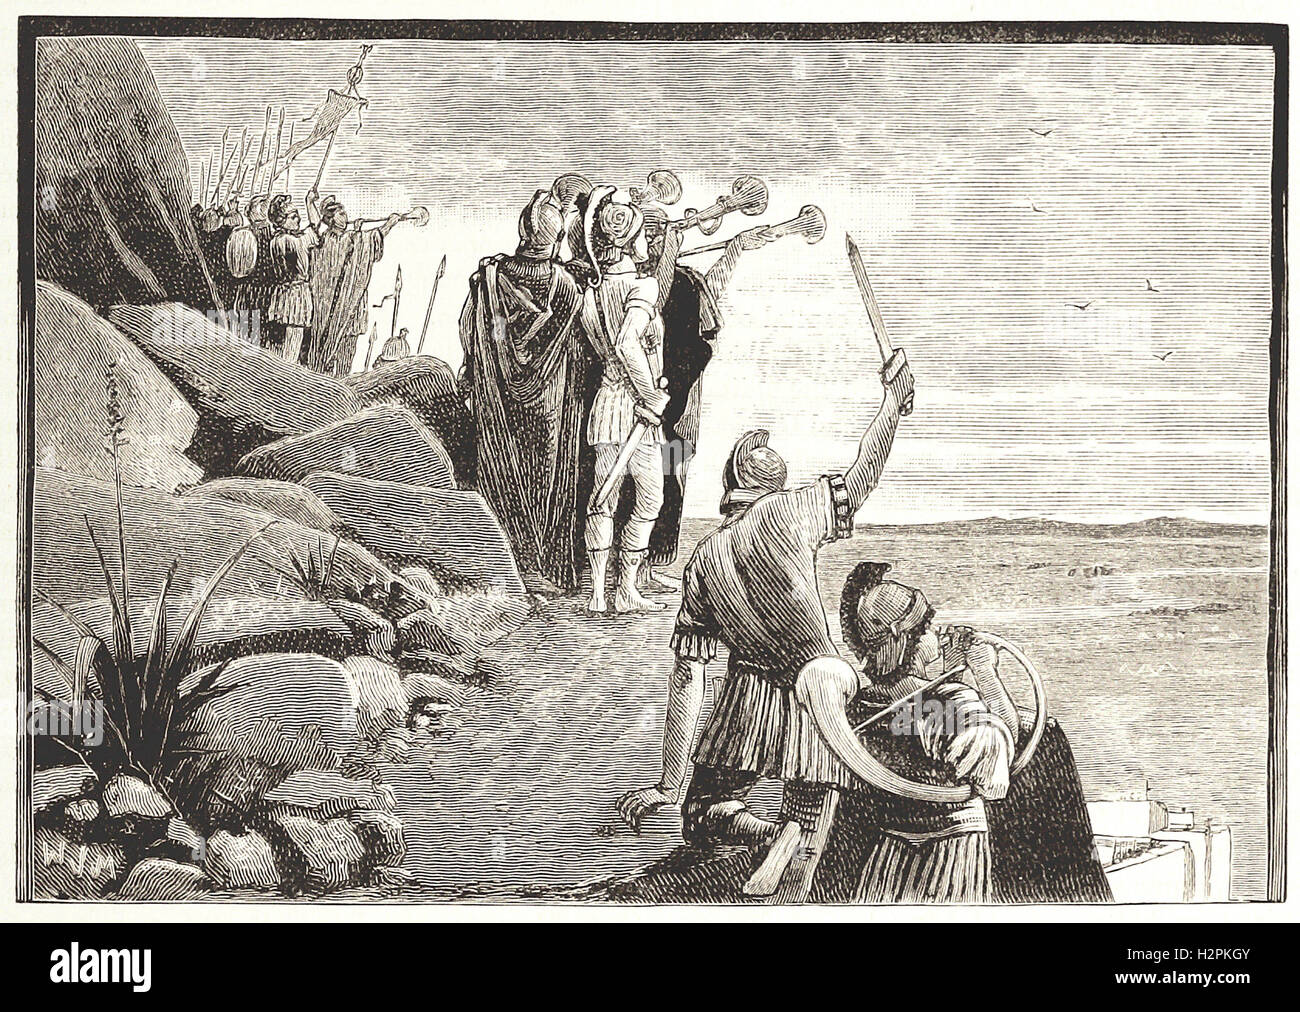 Un incidente EN LA GUERRA JUGURTHINE - desde 'Cassell's ilustra la historia universal' - 1882 Foto de stock